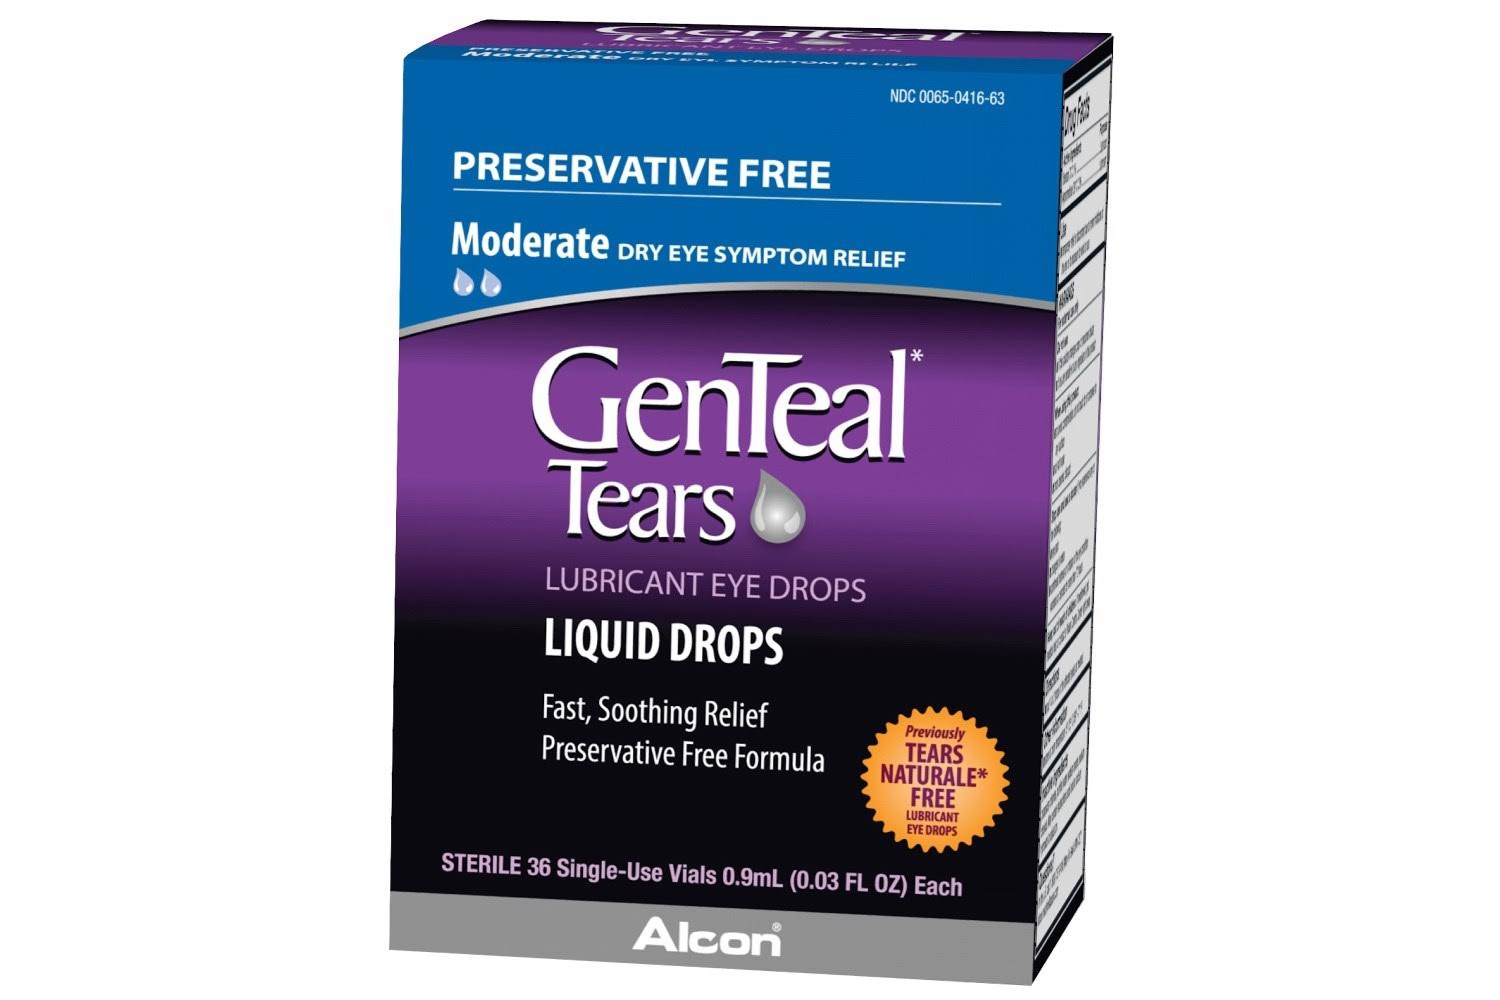 Genteal Tears Lubricant Eye Drops Single-Use Vials, 36 EA